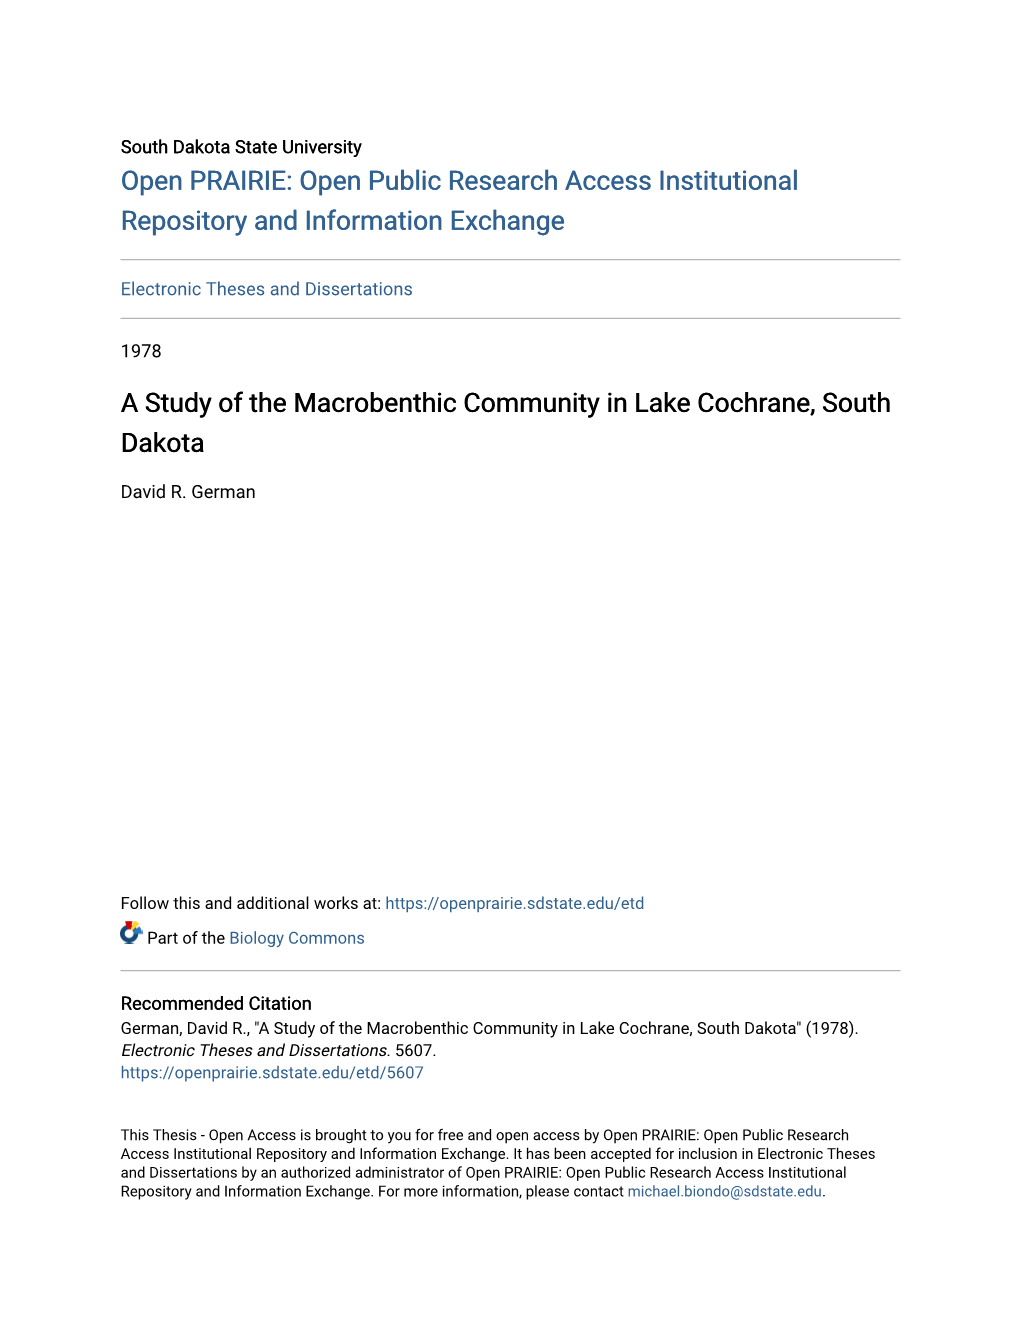 A Study of the Macrobenthic Community in Lake Cochrane, South Dakota